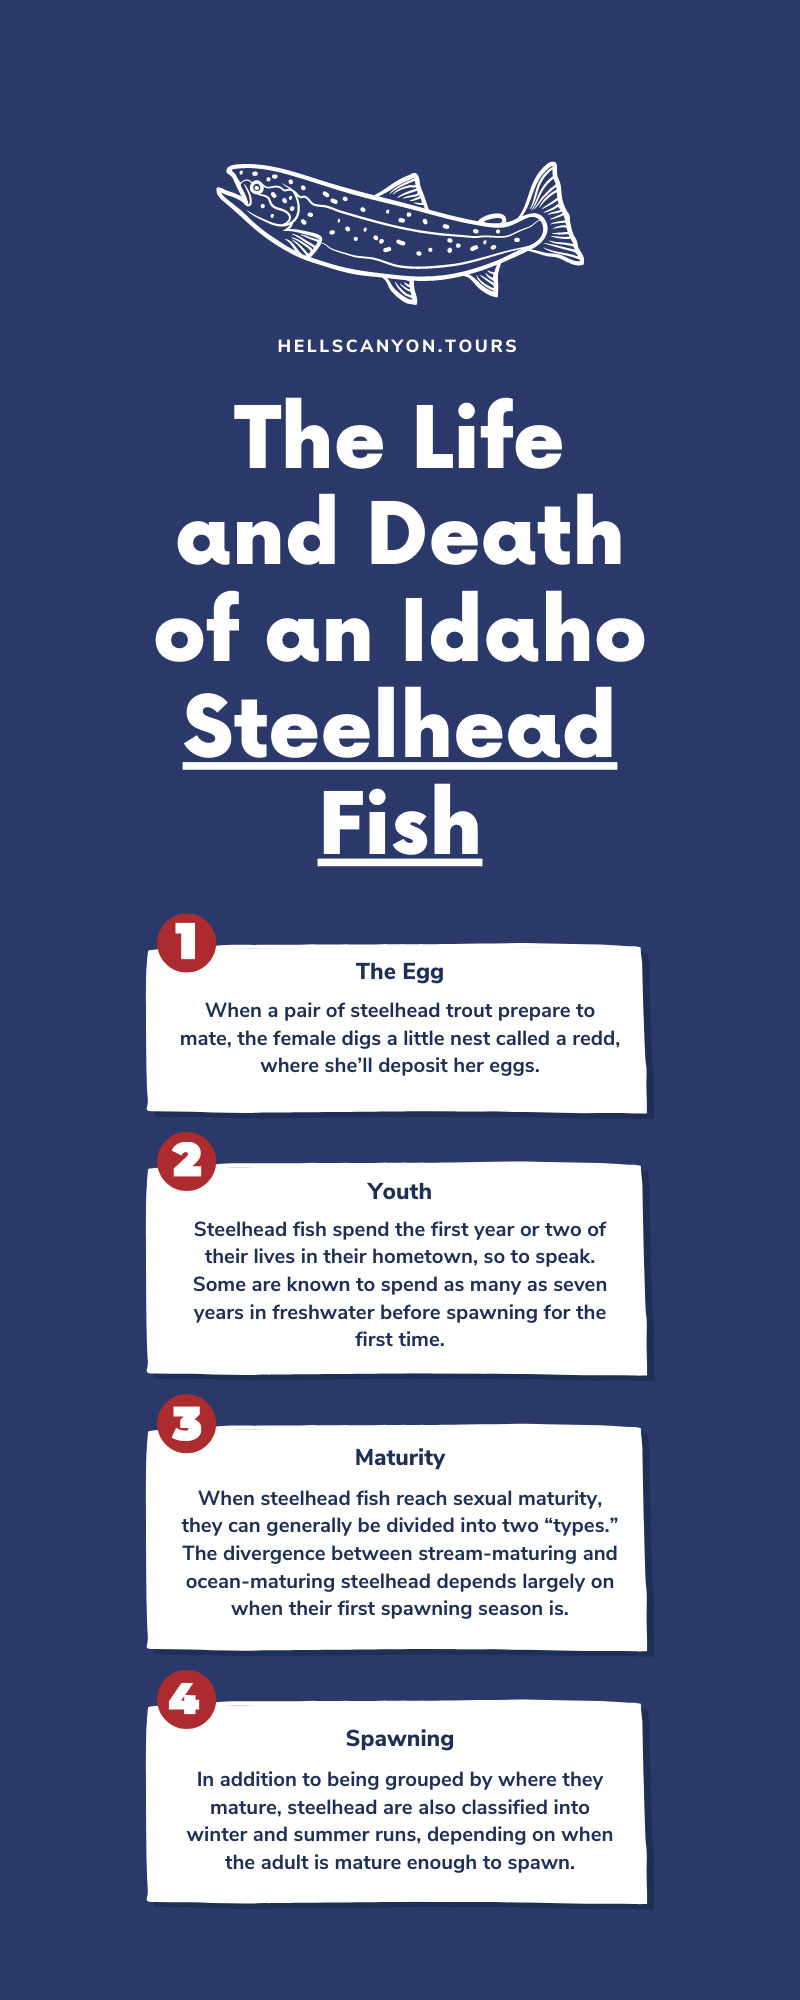 The Life and Death of an Idaho Steelhead Fish